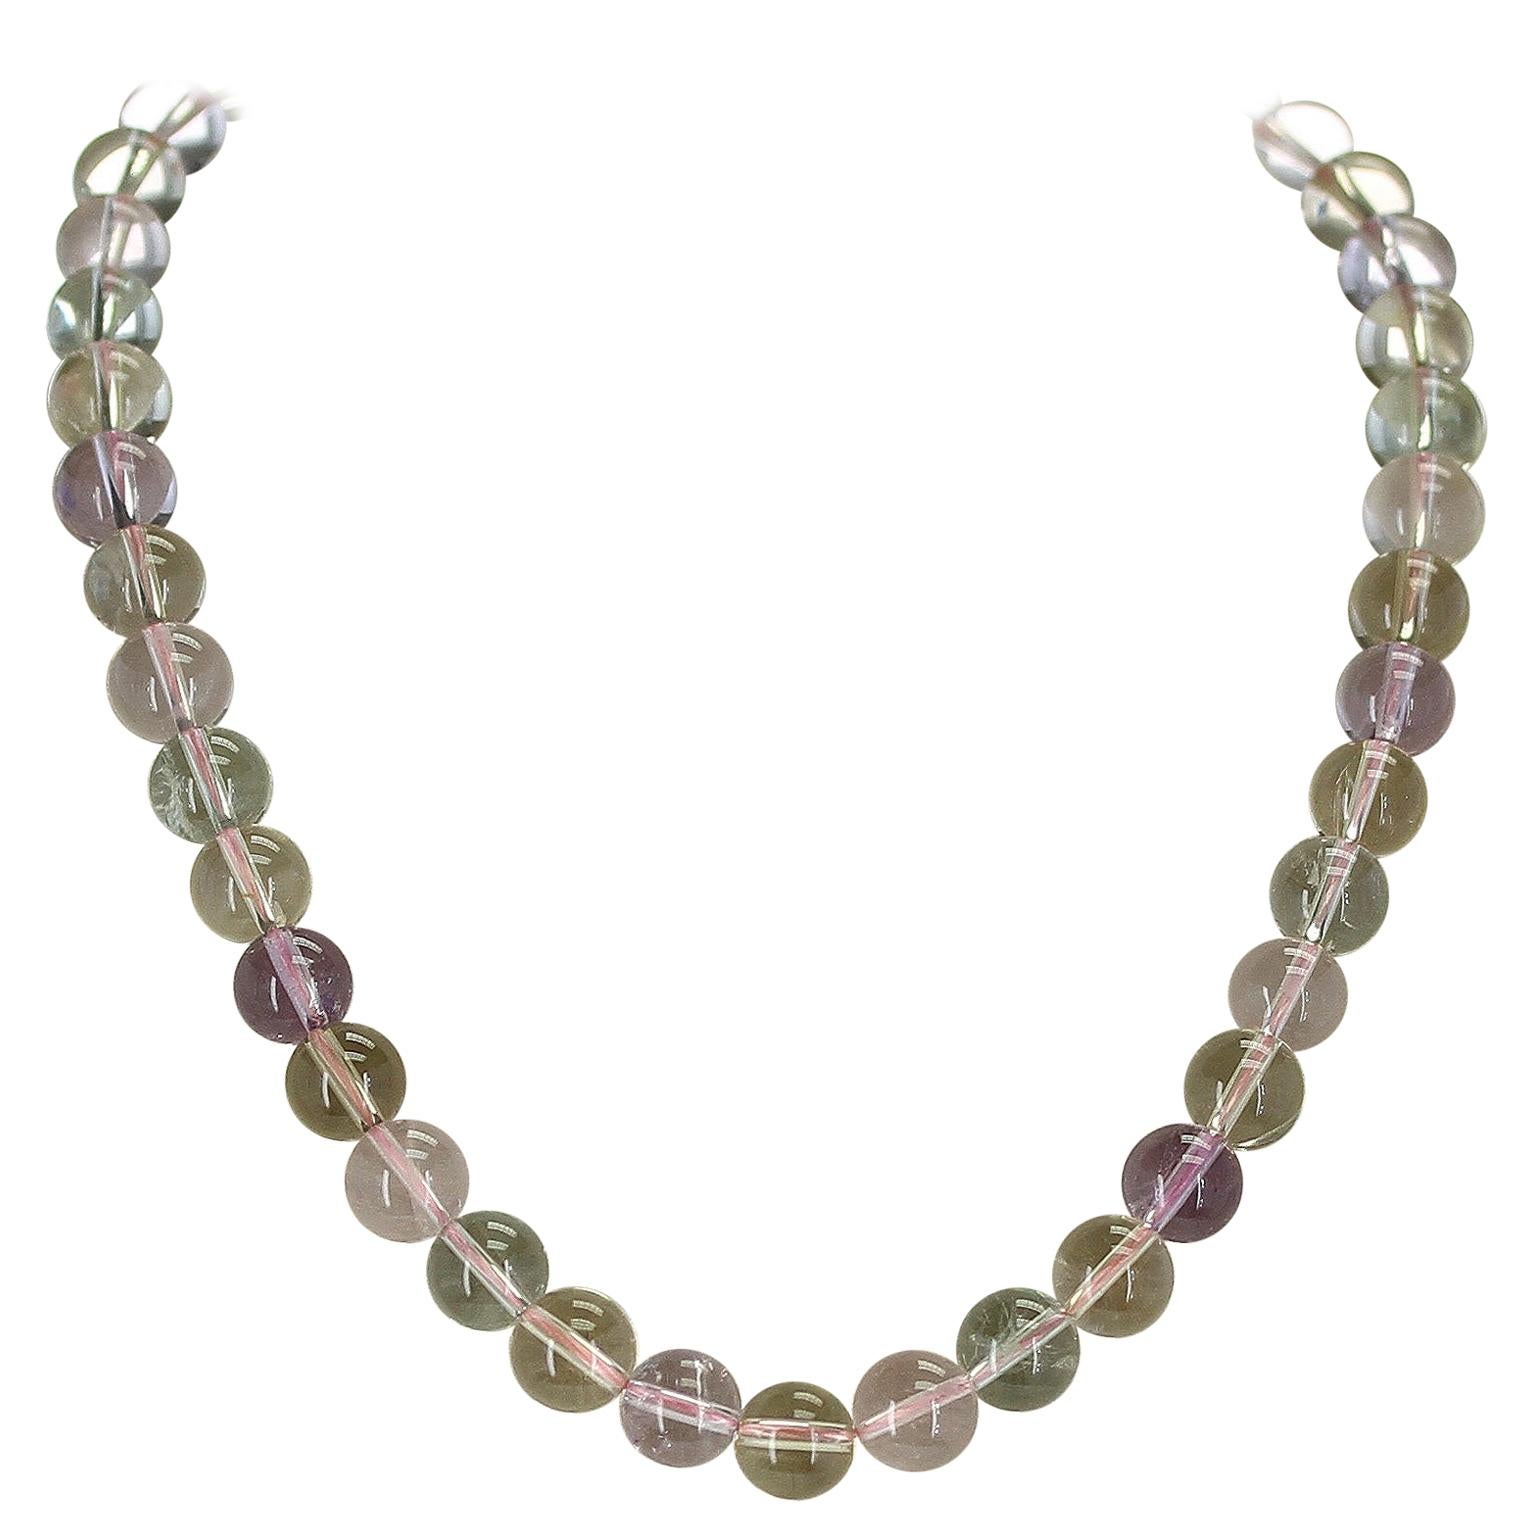 Genuine and Natural Multicolored Round Plain Kunzite Beads Necklace, 14 Karat